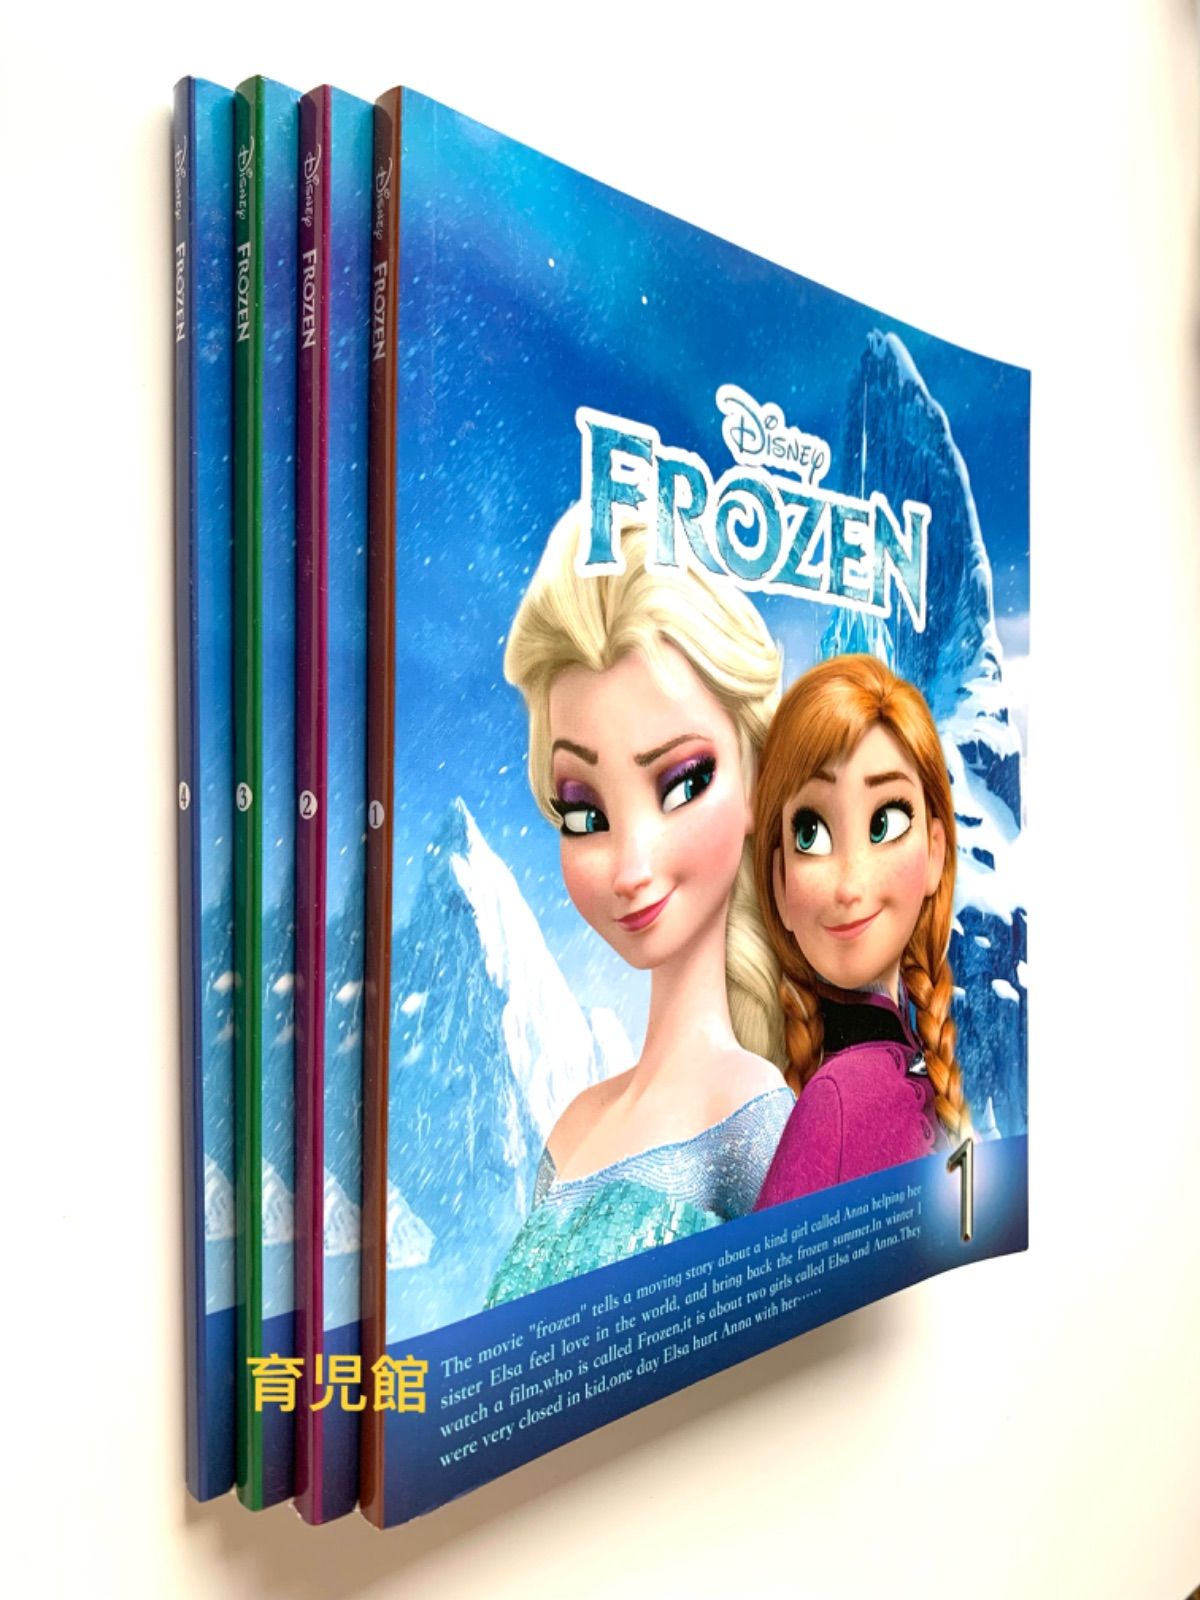 Frozen絵本4冊 アナと雪の女王 音源付動画付き マイヤペン対応 - メルカリ